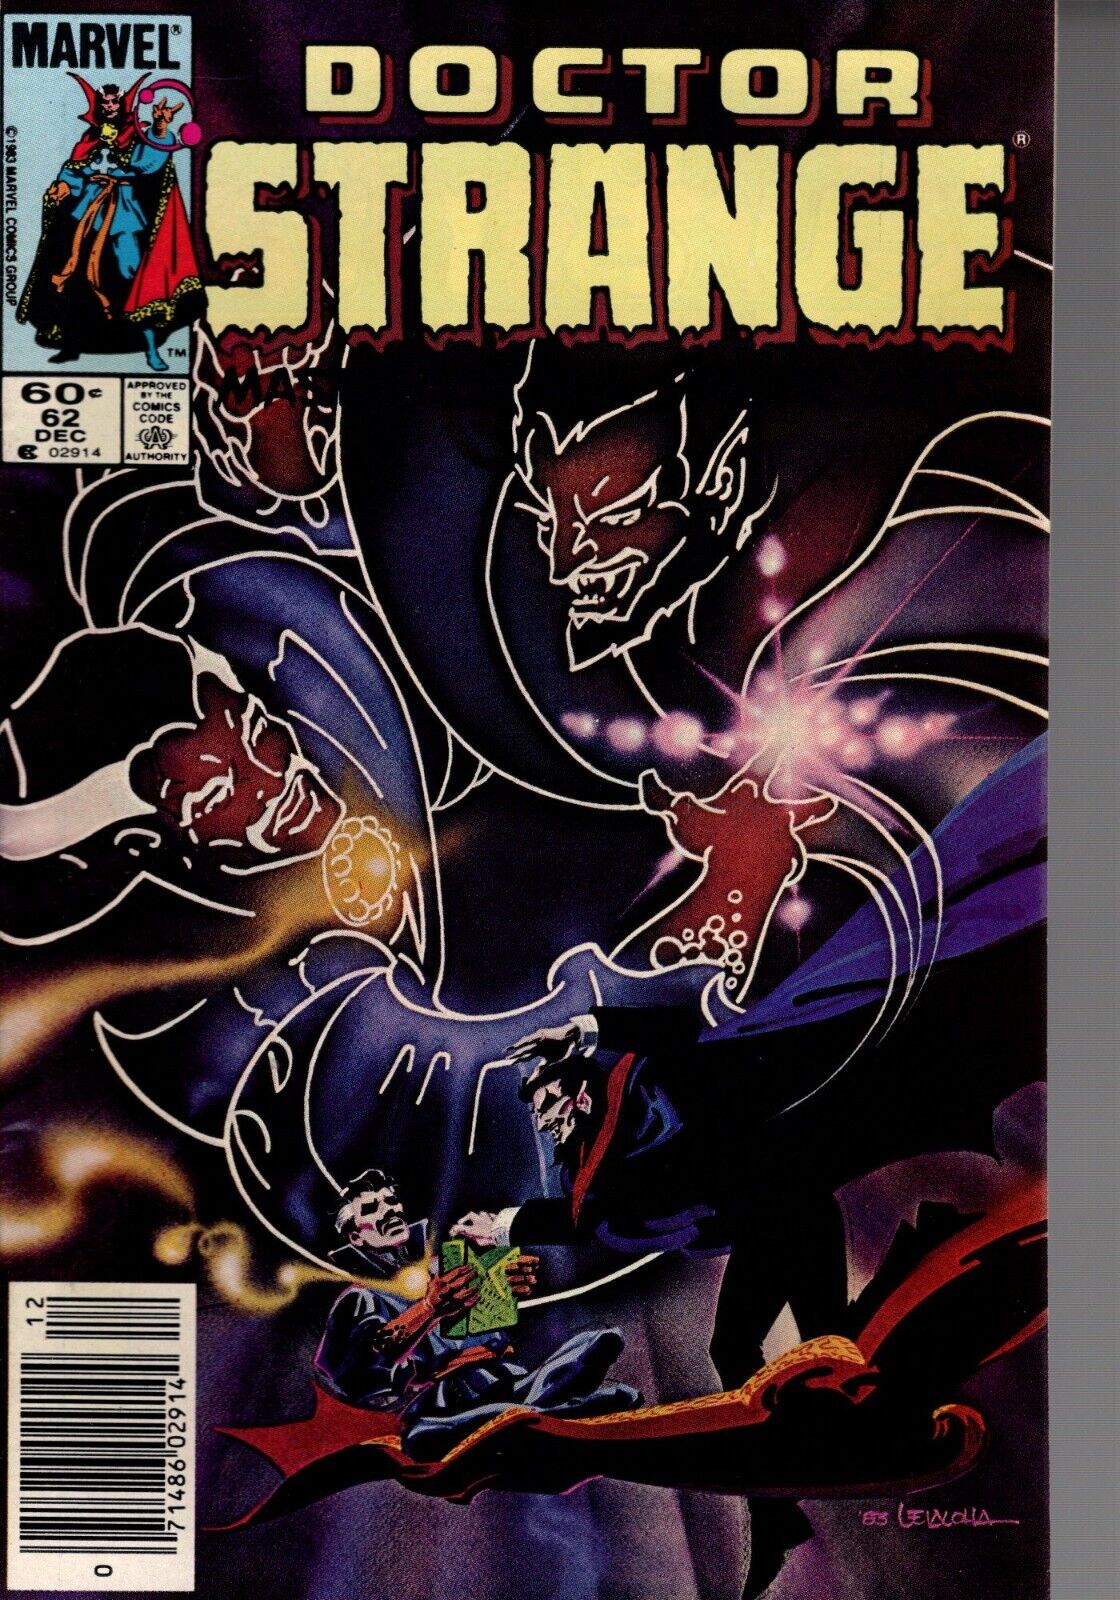 1983 Doctor Strange #62 vs. Dracula - stored since purchase -